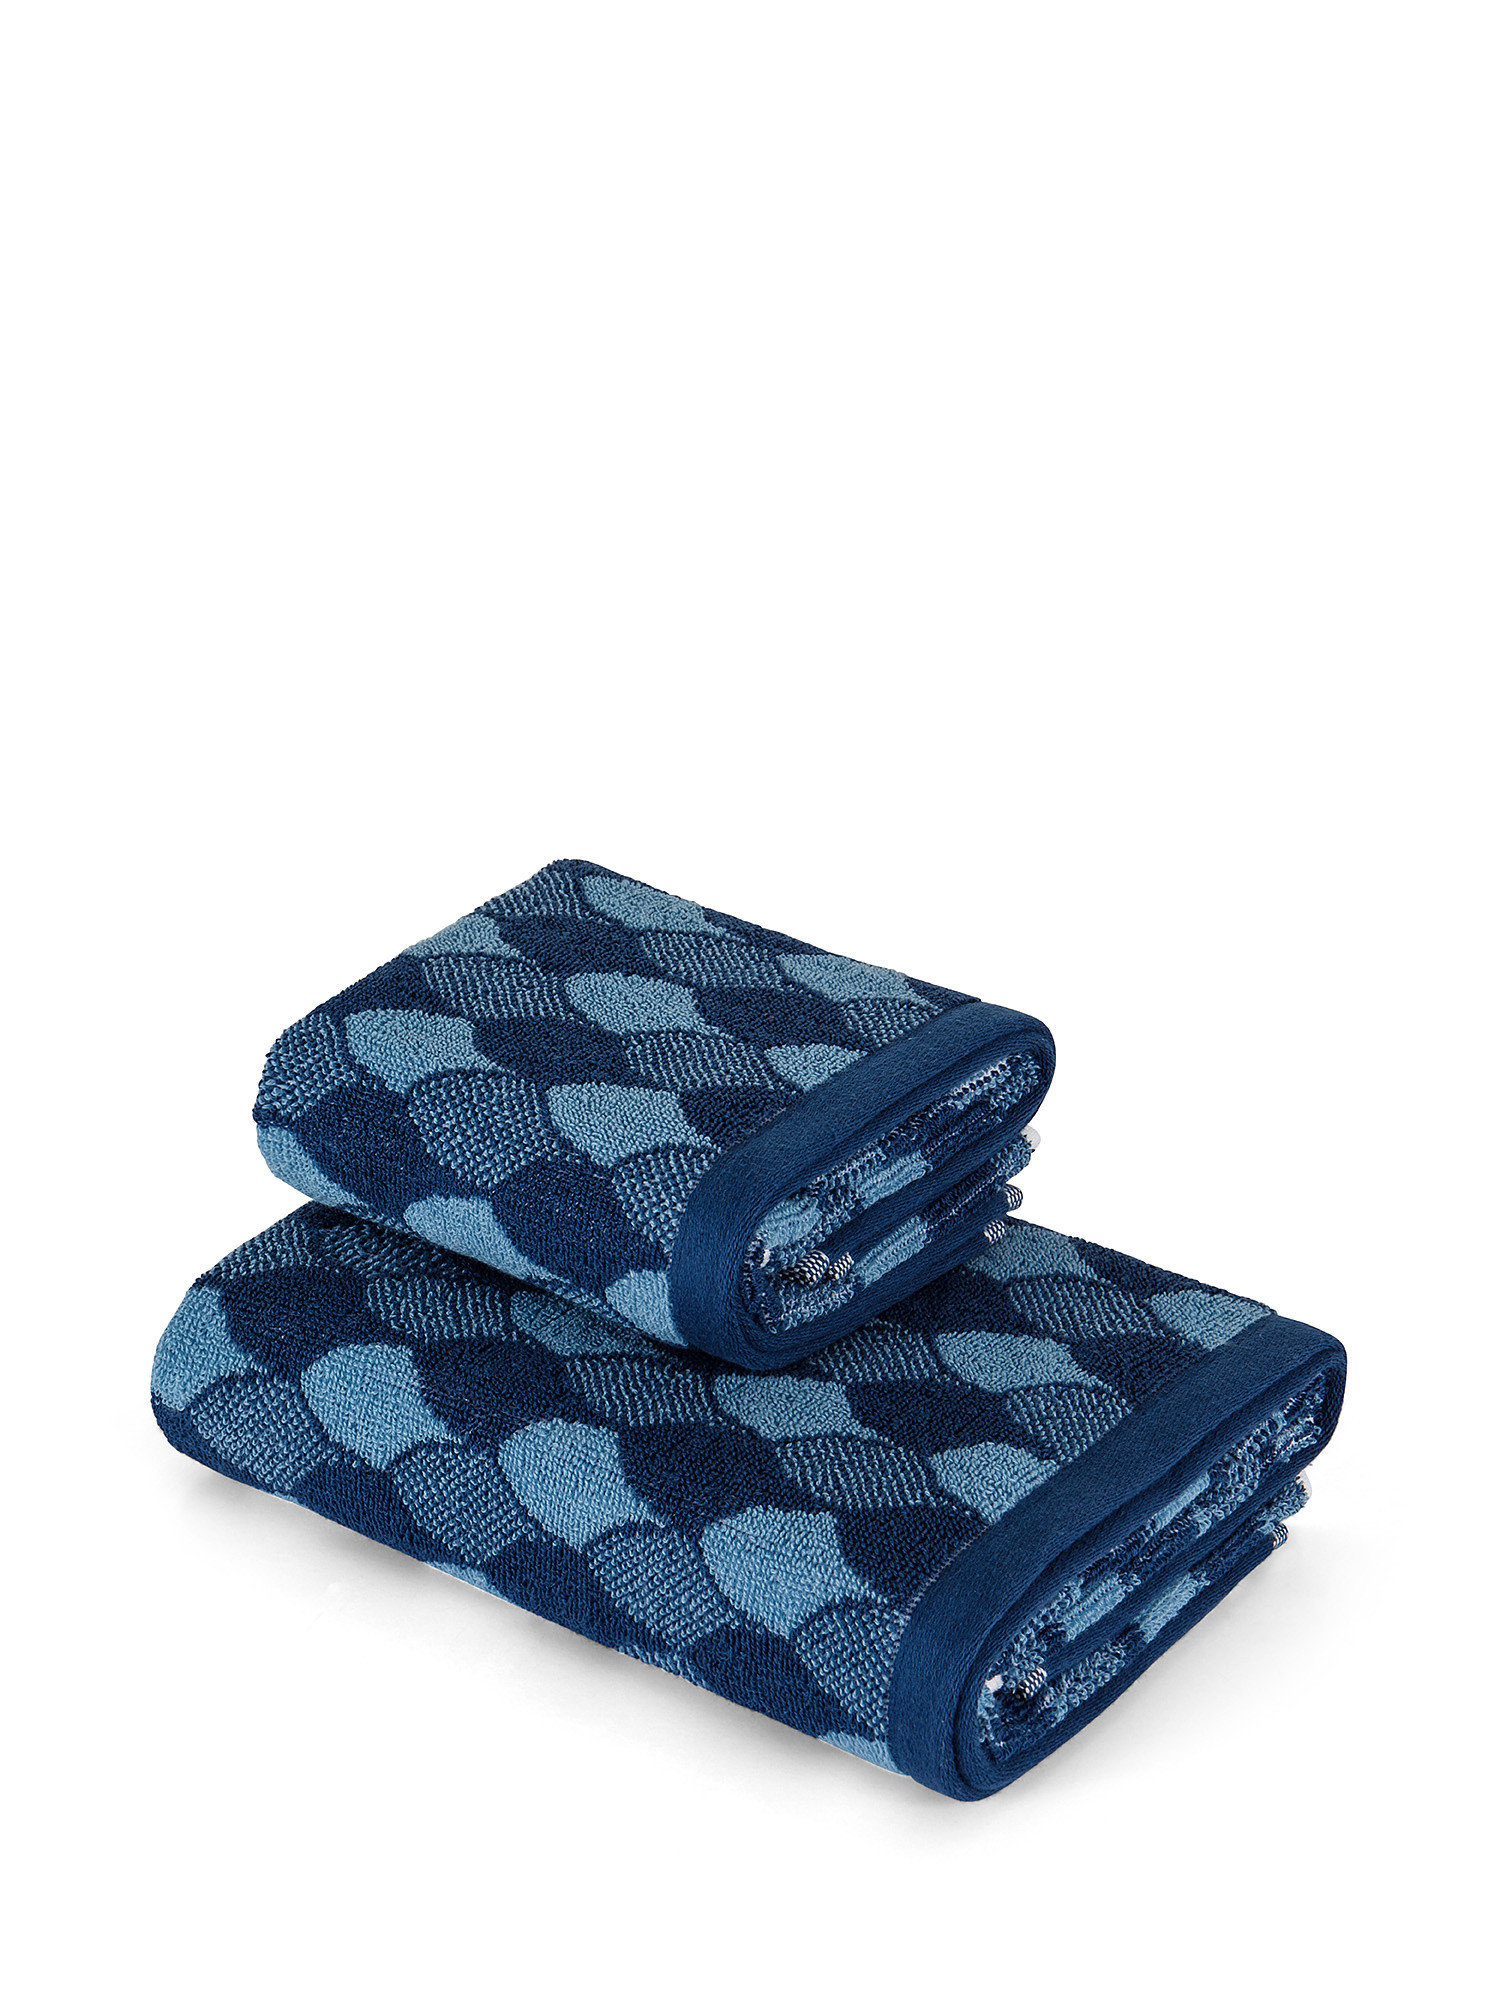 Asciugamano spugna di cotone motivo squame, Blu, large image number 0